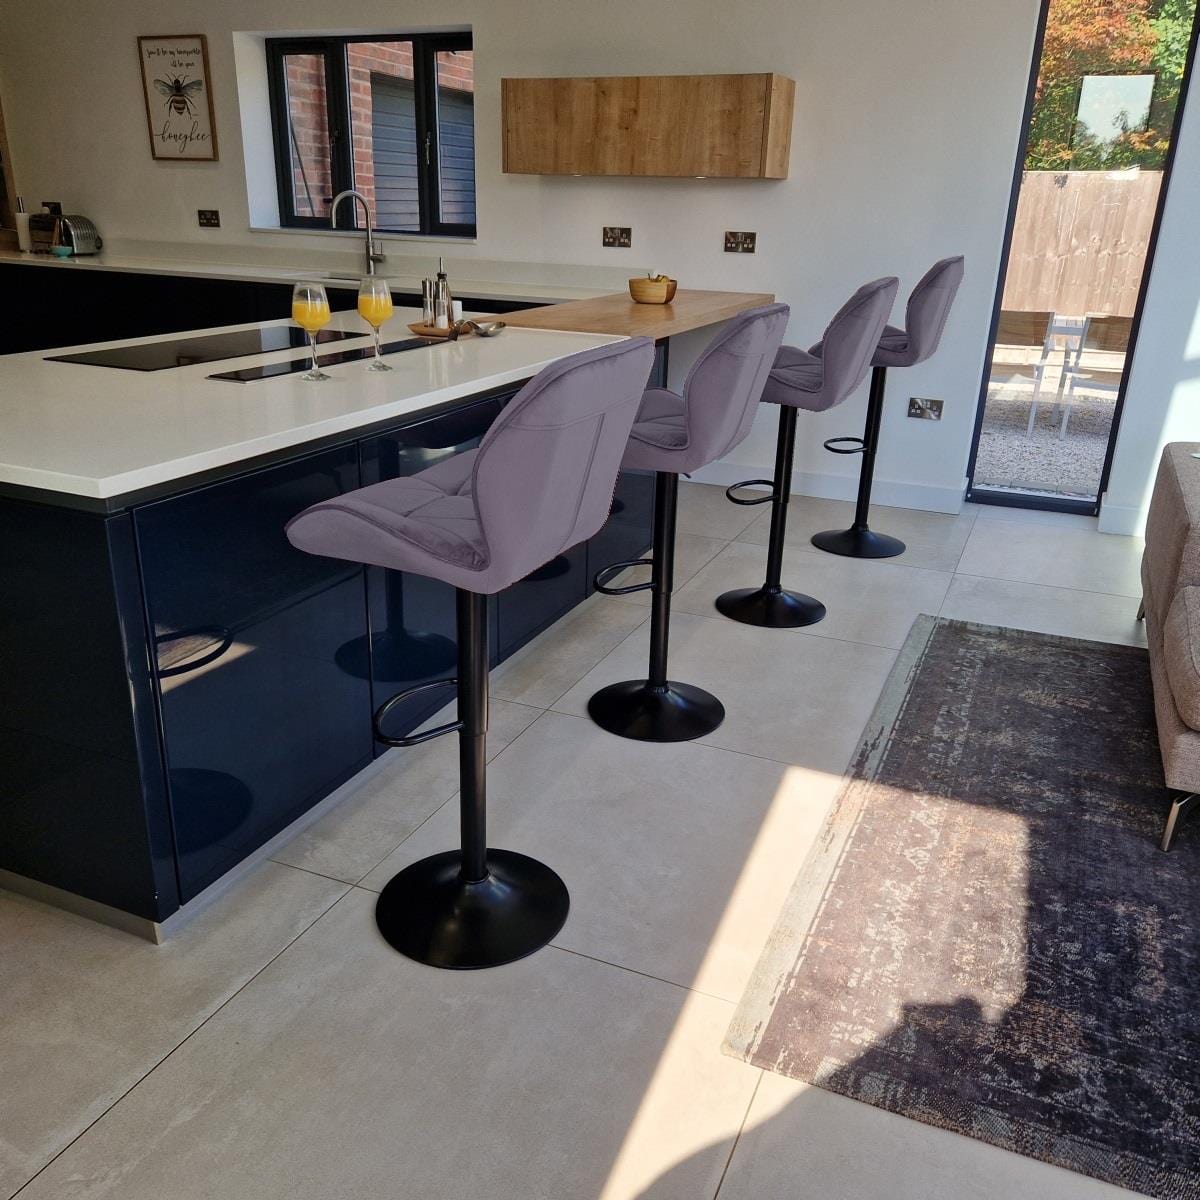 Quatropi Quatropi Set of 4 Modern Kitchen Bar Stools - Grey Velvet - Adjustable Seat Height